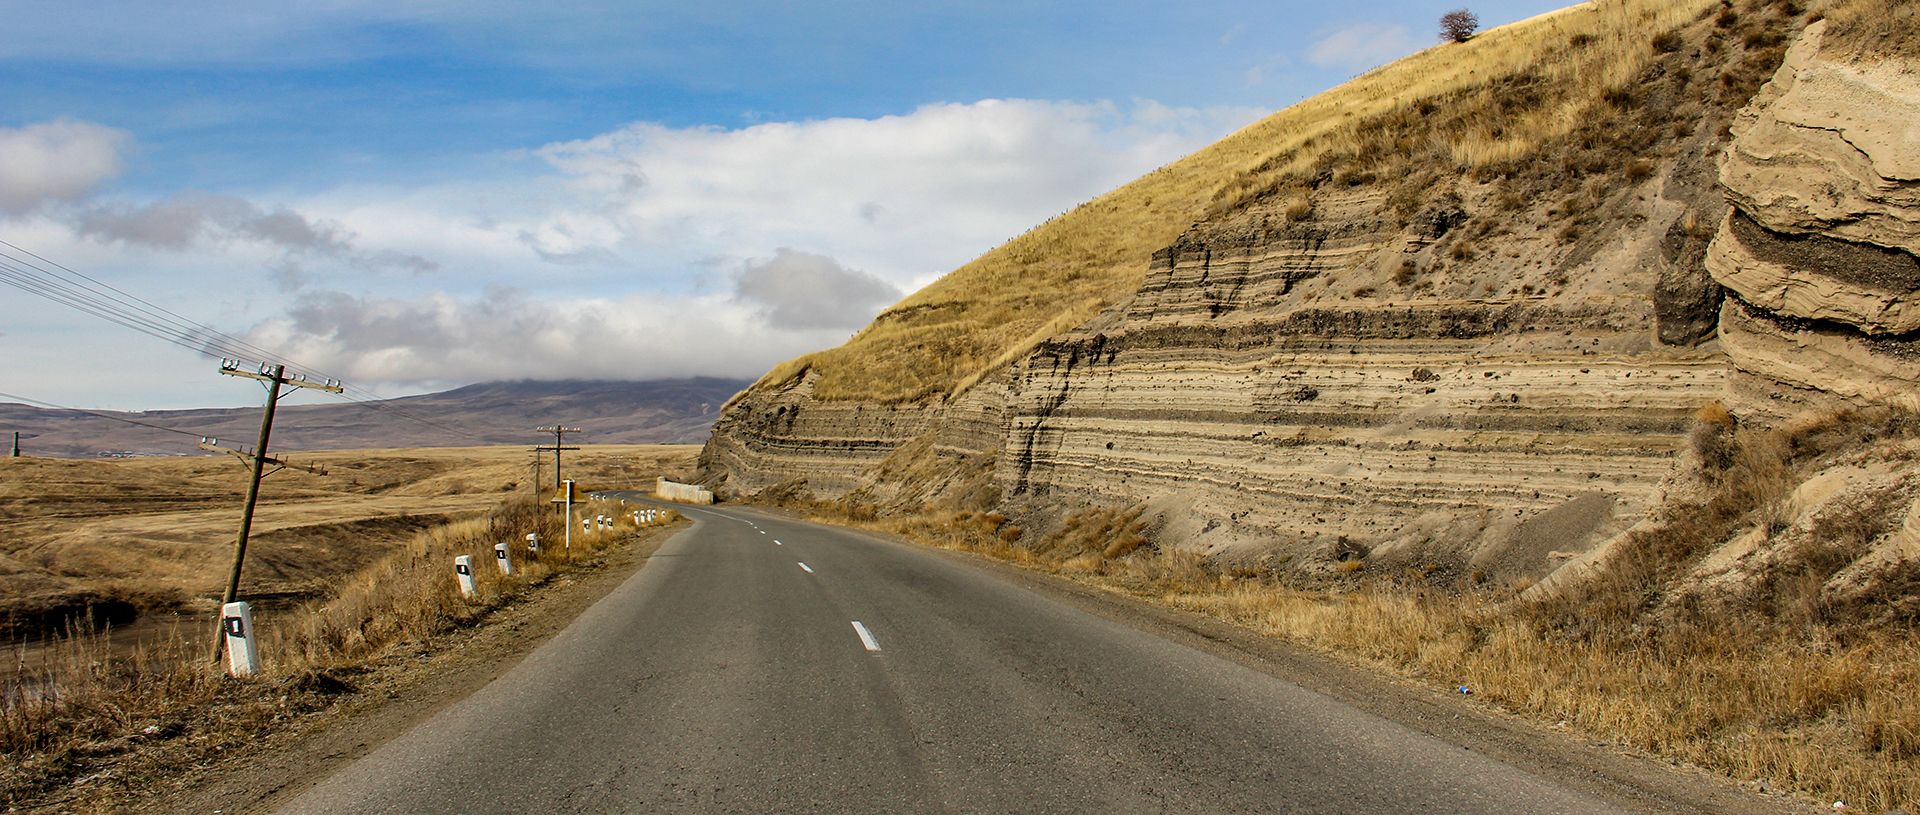 Armenia travel blog: hitchhiking in Armenia.